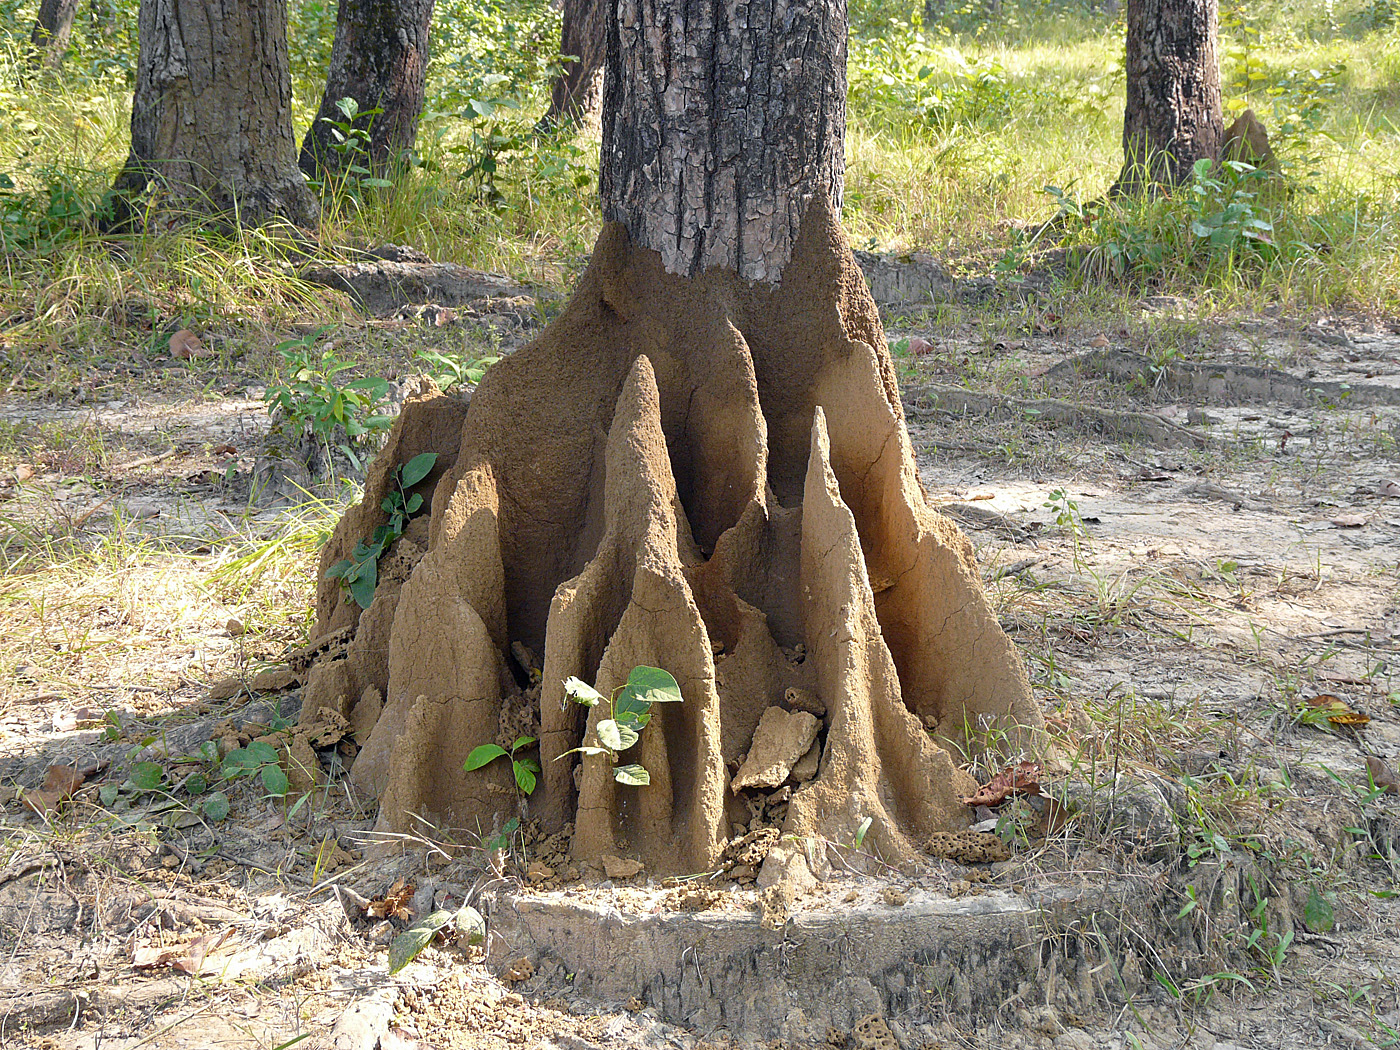 Termite mound, Chitwan National Park